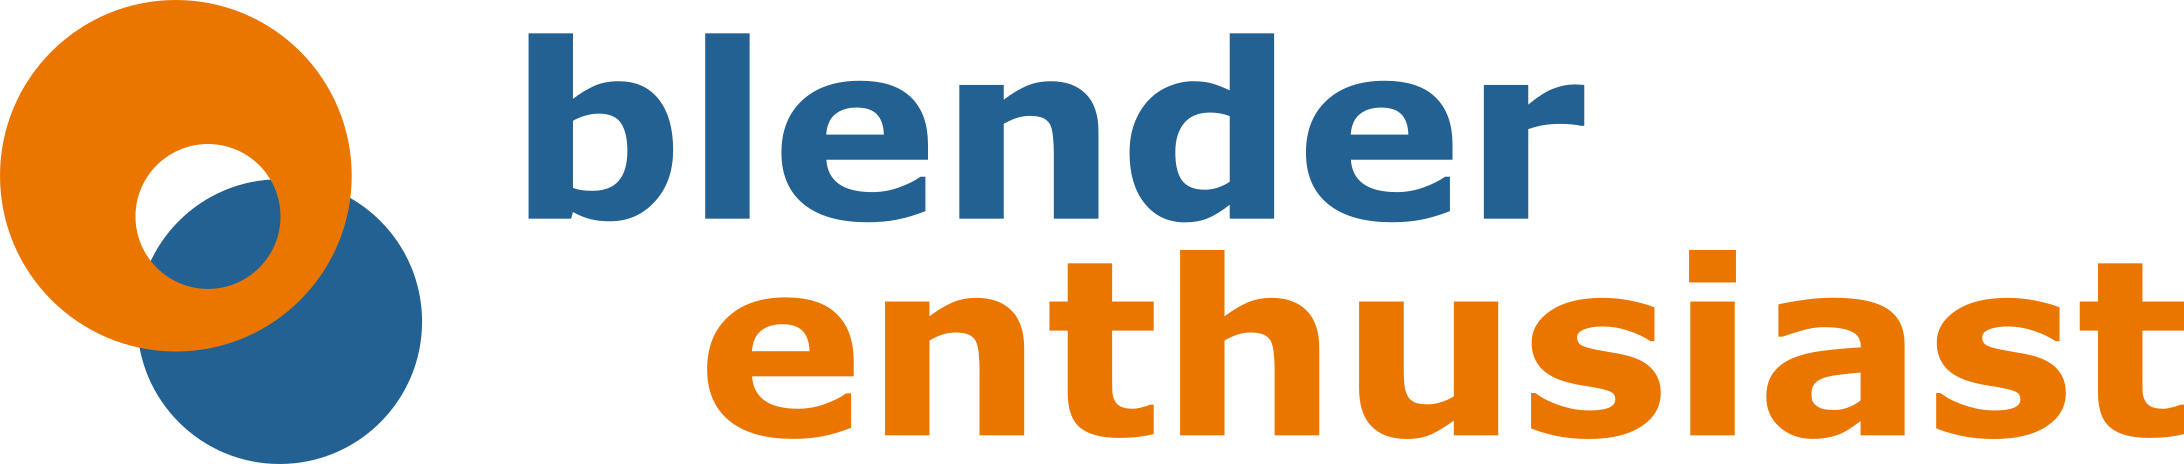 blender enthusiast logo: a blender-orange open-centered circle over a blender-blue, close-centered circle with site name